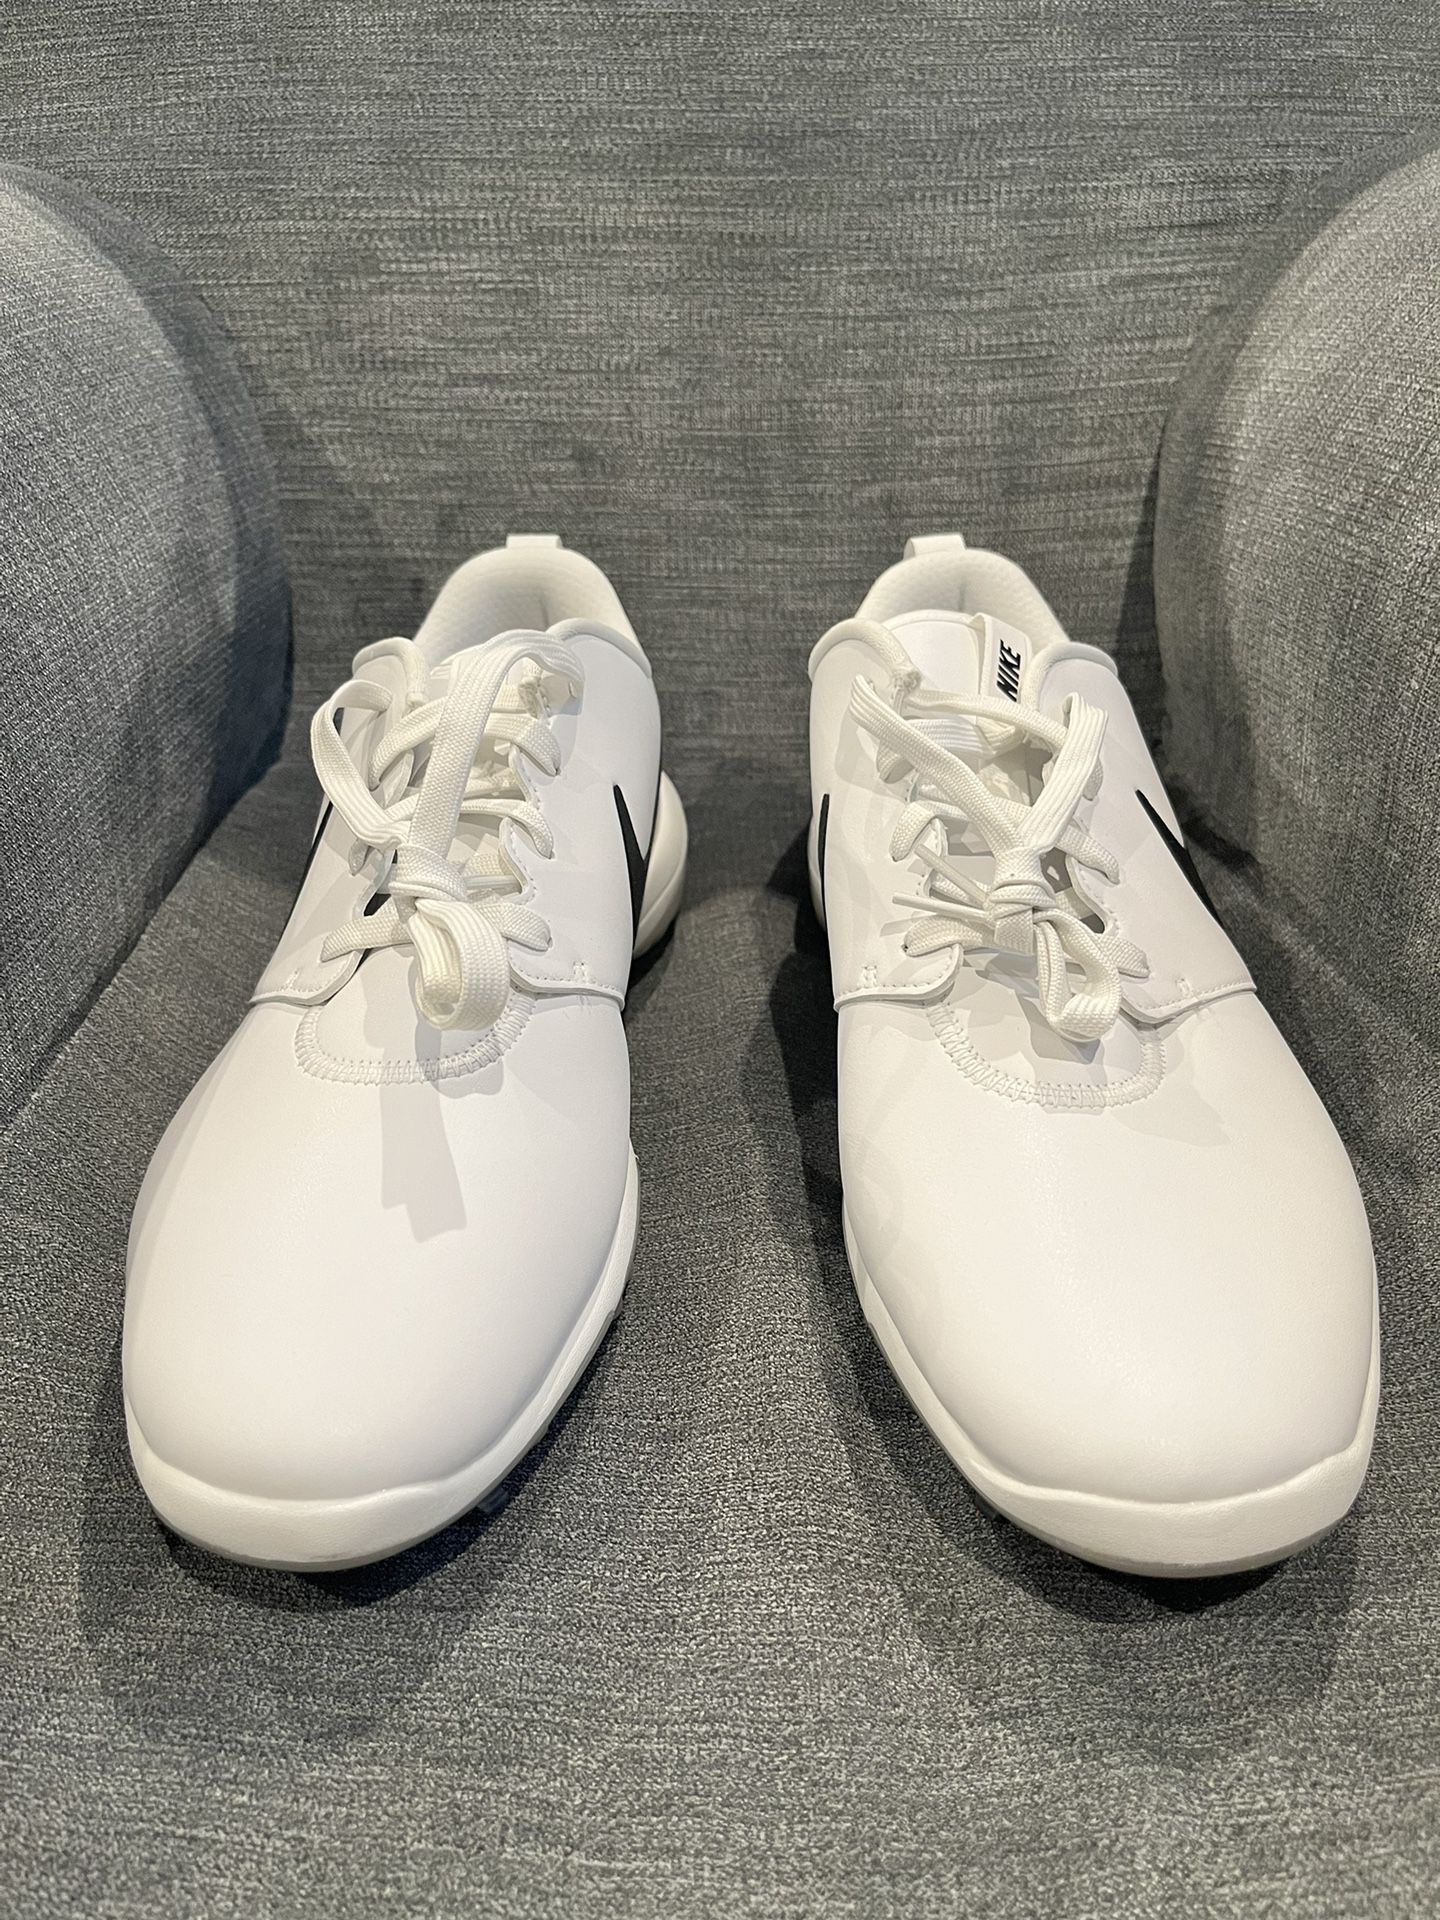 Nike Roshe G Tour Summit White Black AR5580-100 Men's Golf Shoes Size 11.5M🔥